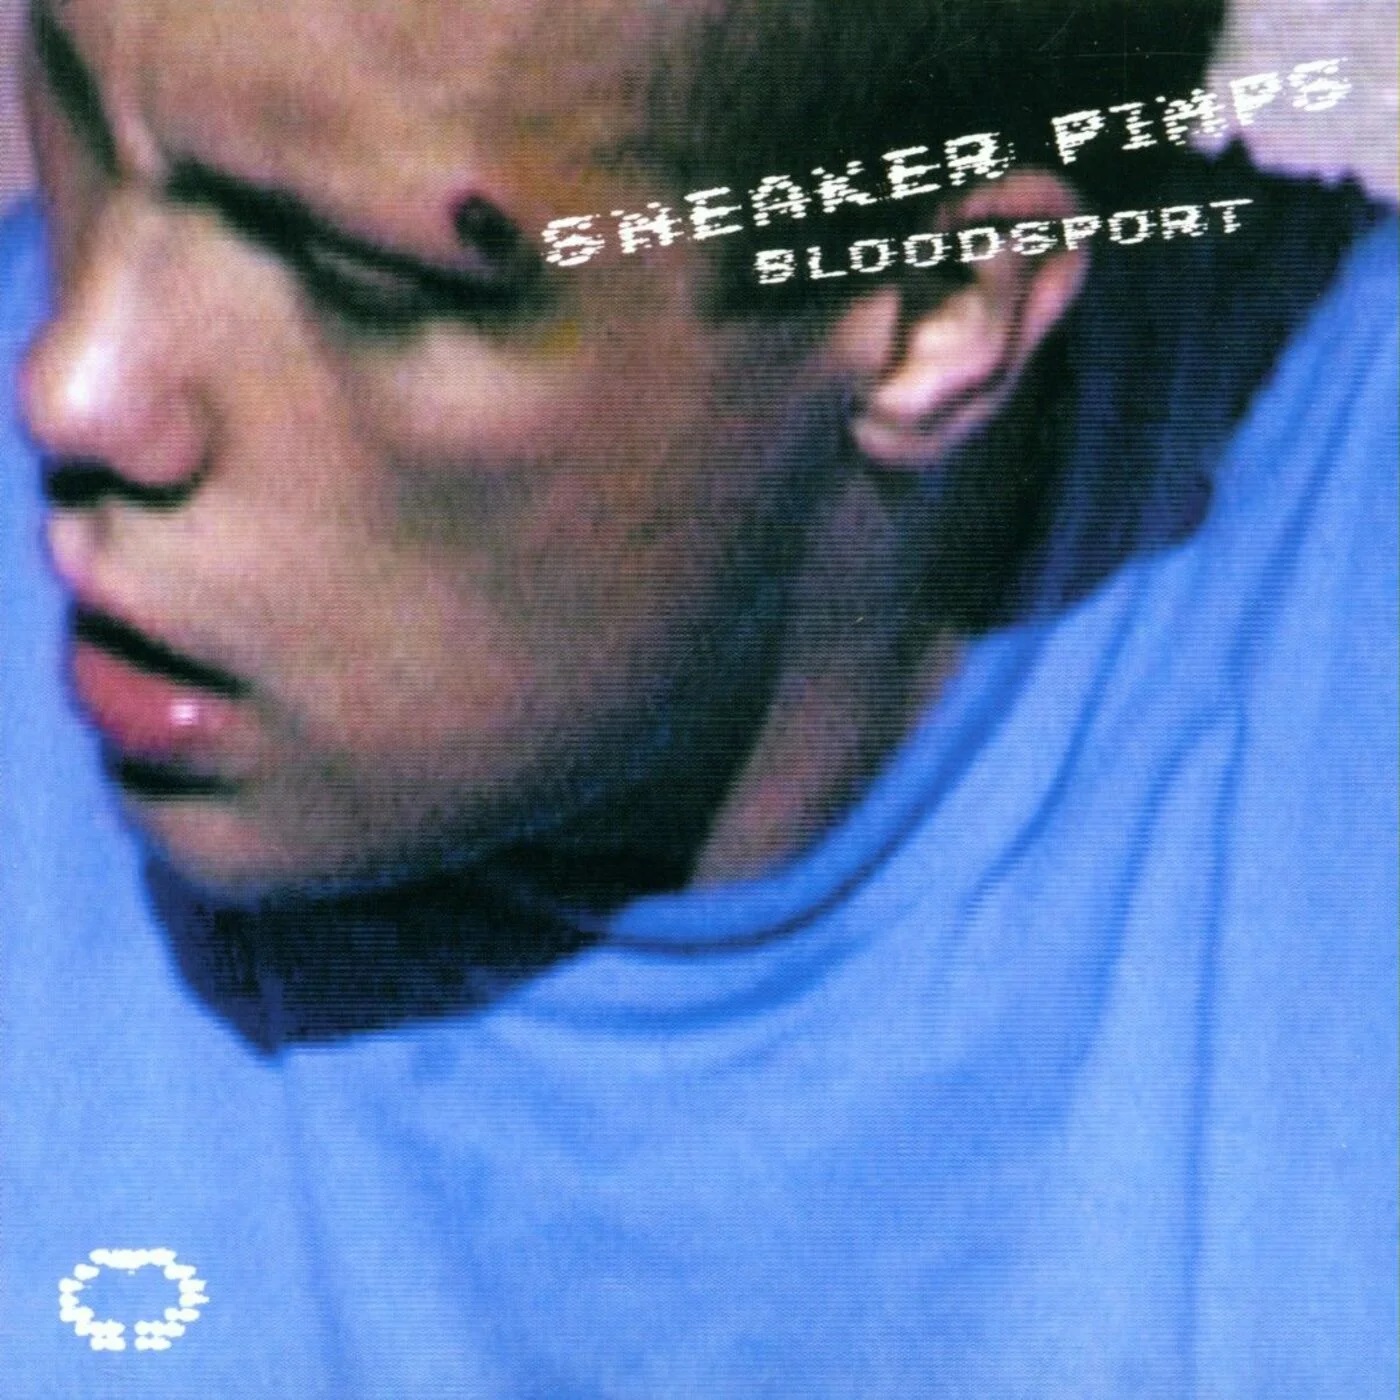 Sneaker Pimps — Bloodsport cover artwork